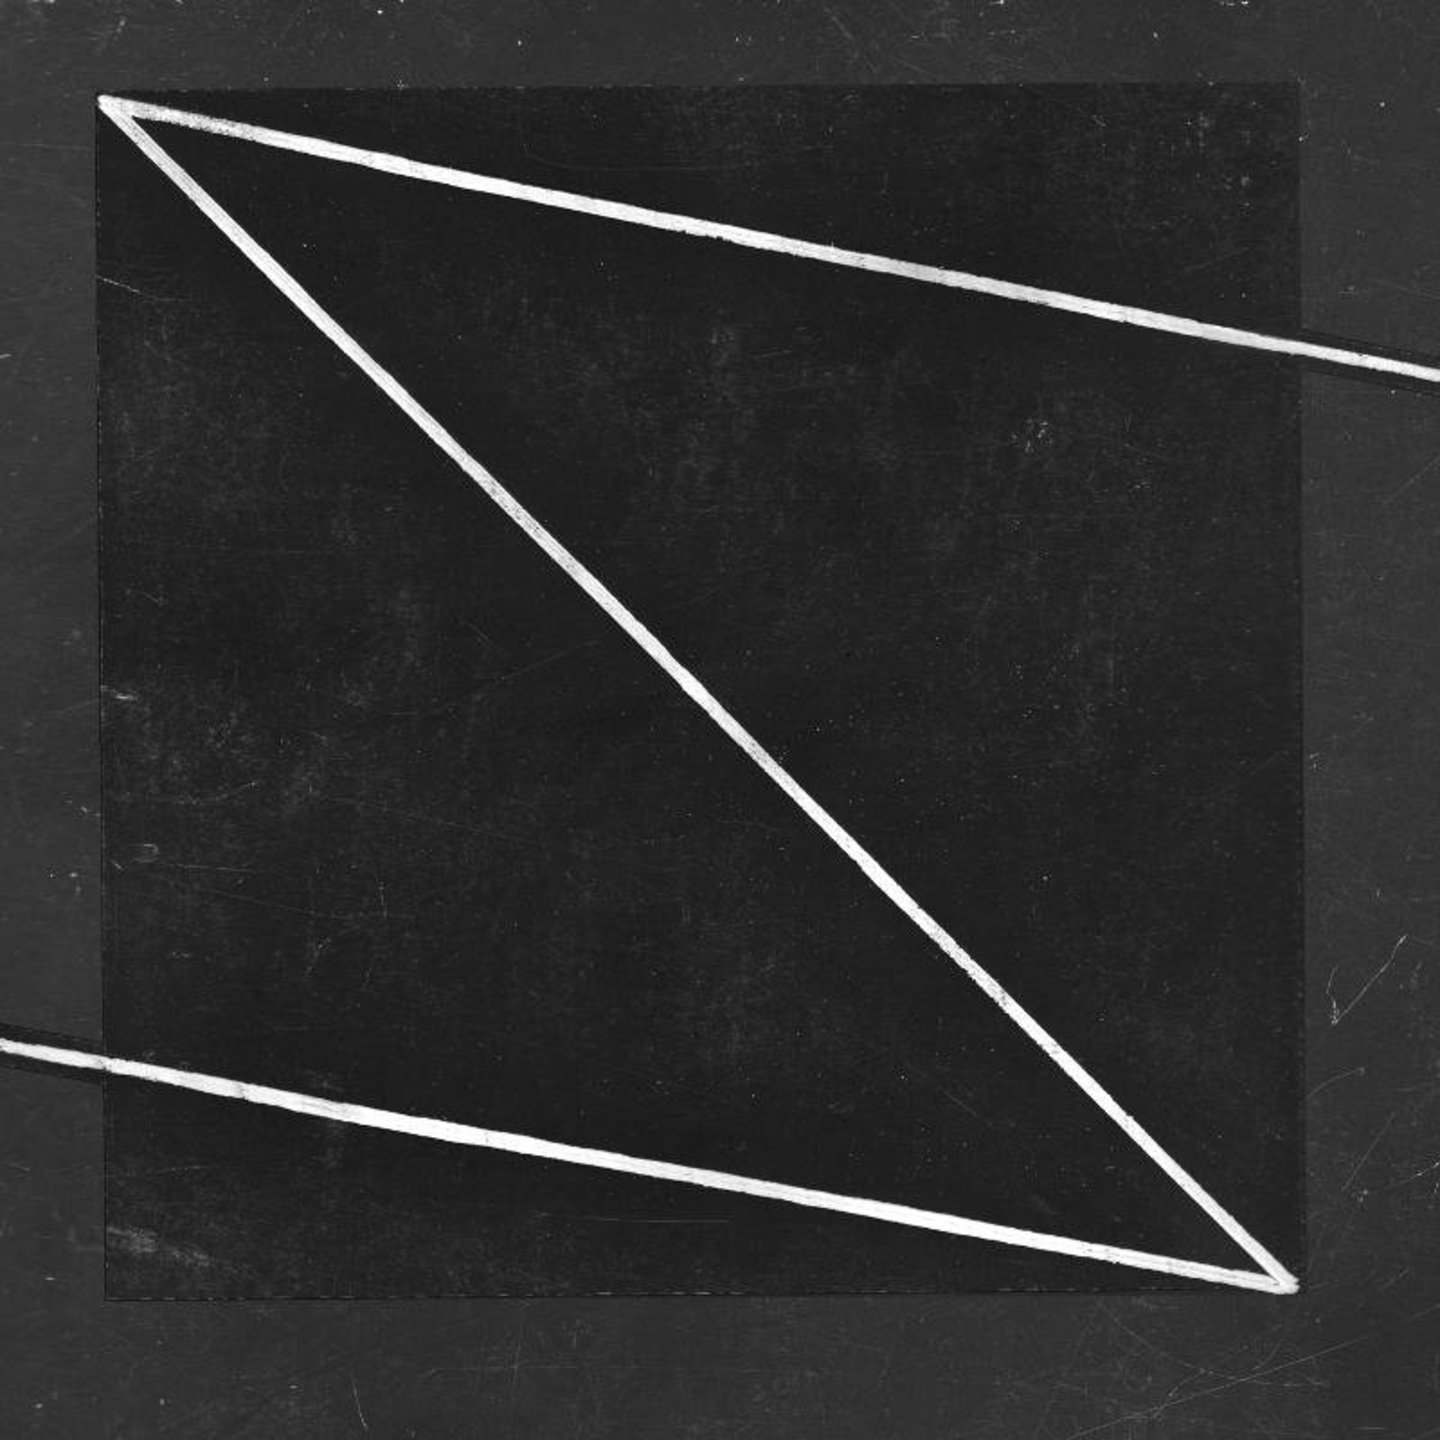 SOFTMOON, THE - Zeros LP Clear vinyl